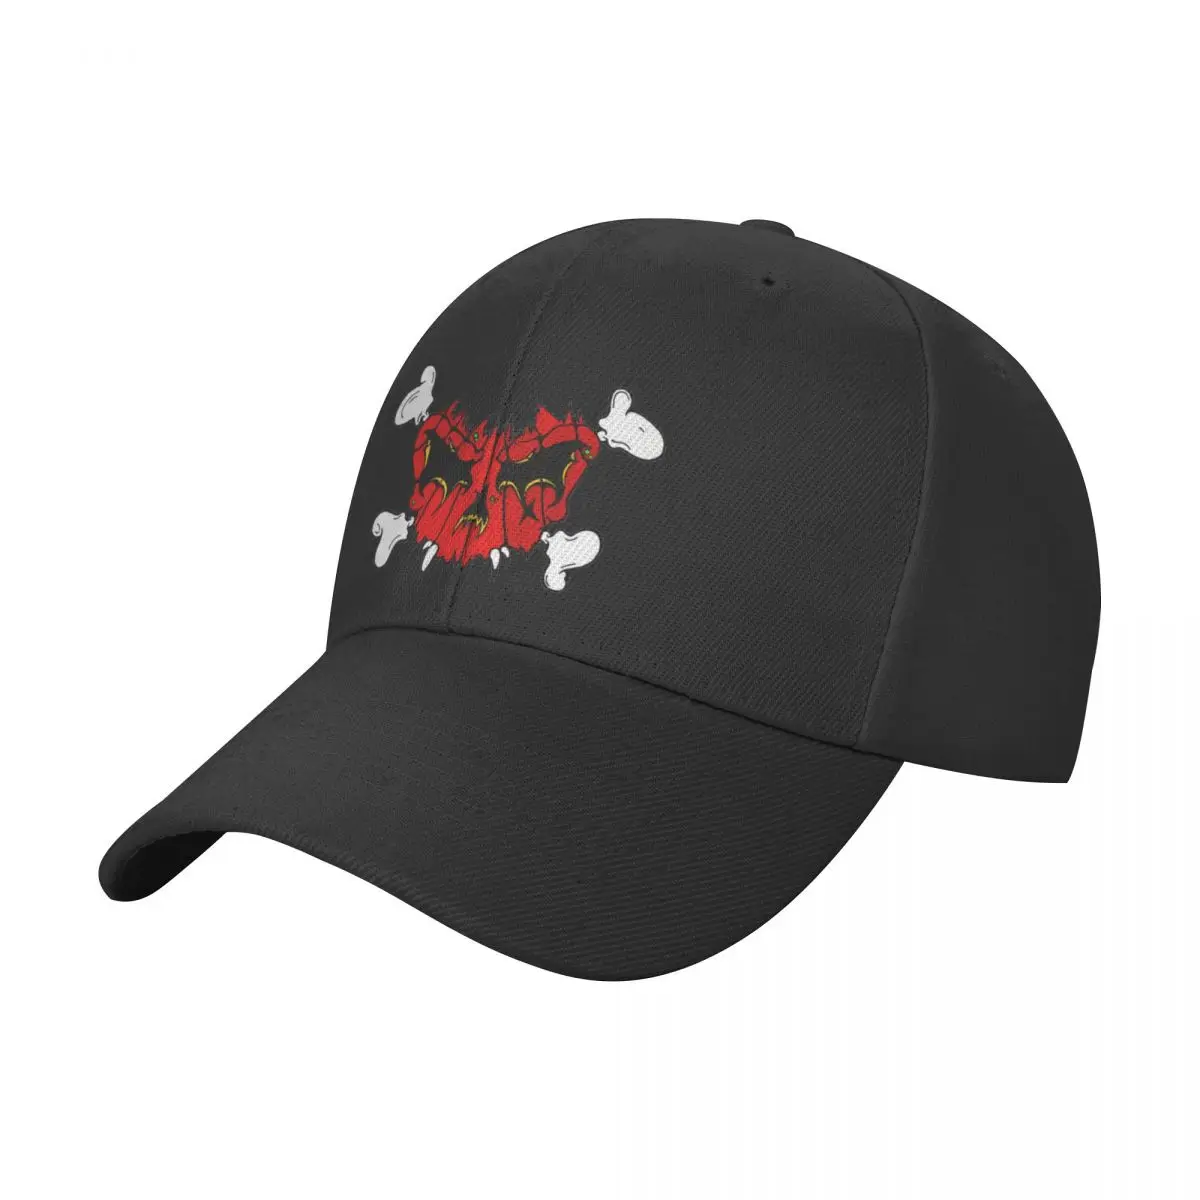 

Jack and bones back for blood logo Baseball Cap Wild Ball Hat New Hat Trucker Cap dad hat Golf Men Women's